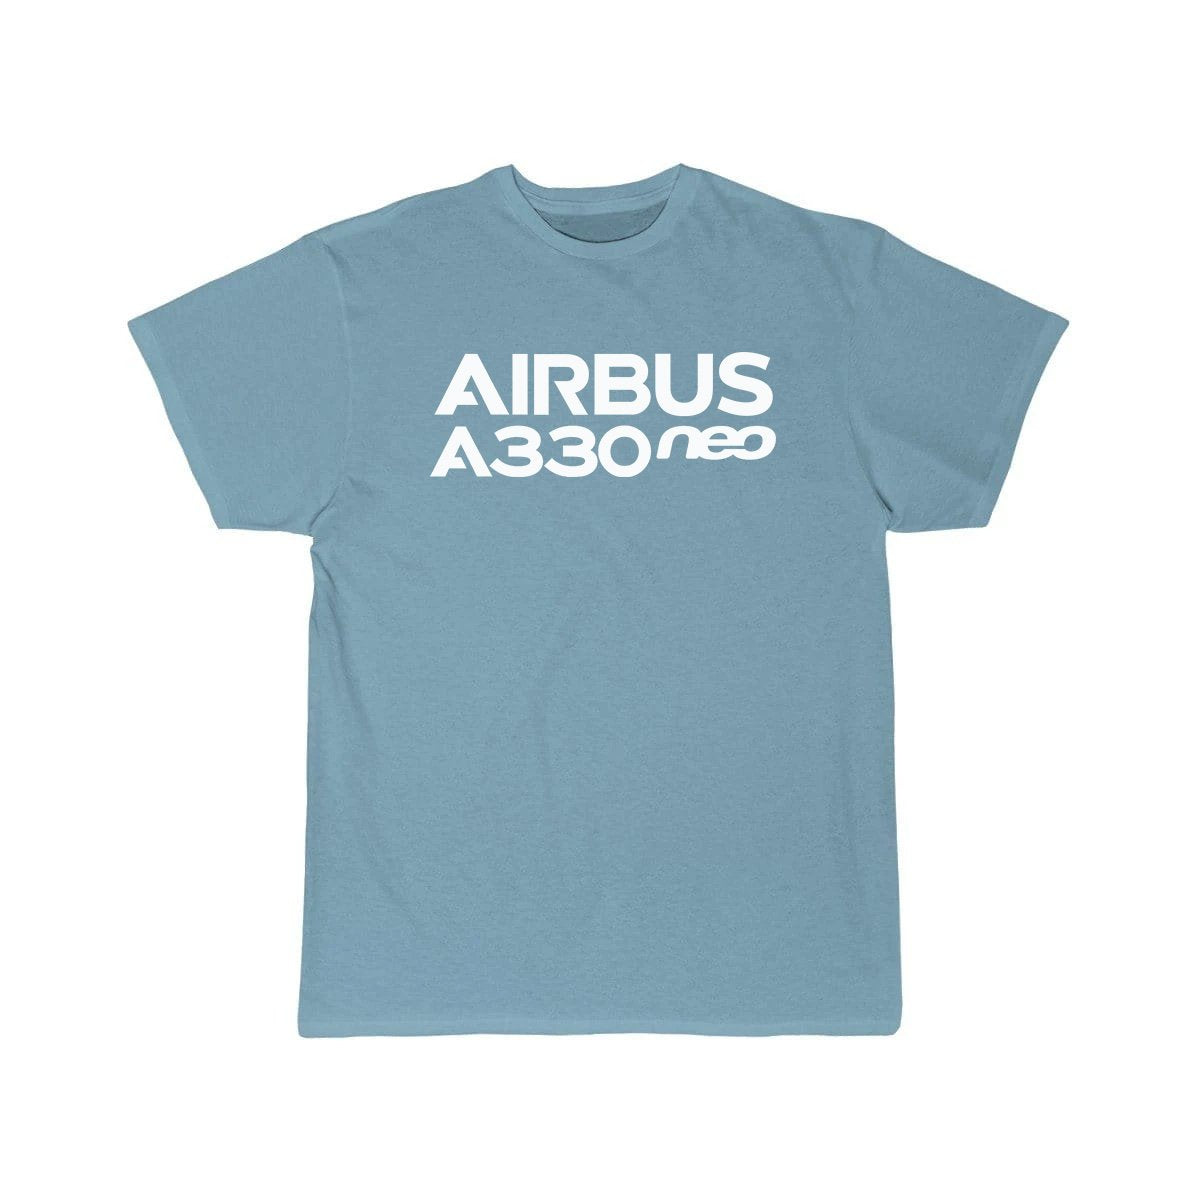 Airbus A330Neo Aviation Pilot T-Shirt THE AV8R